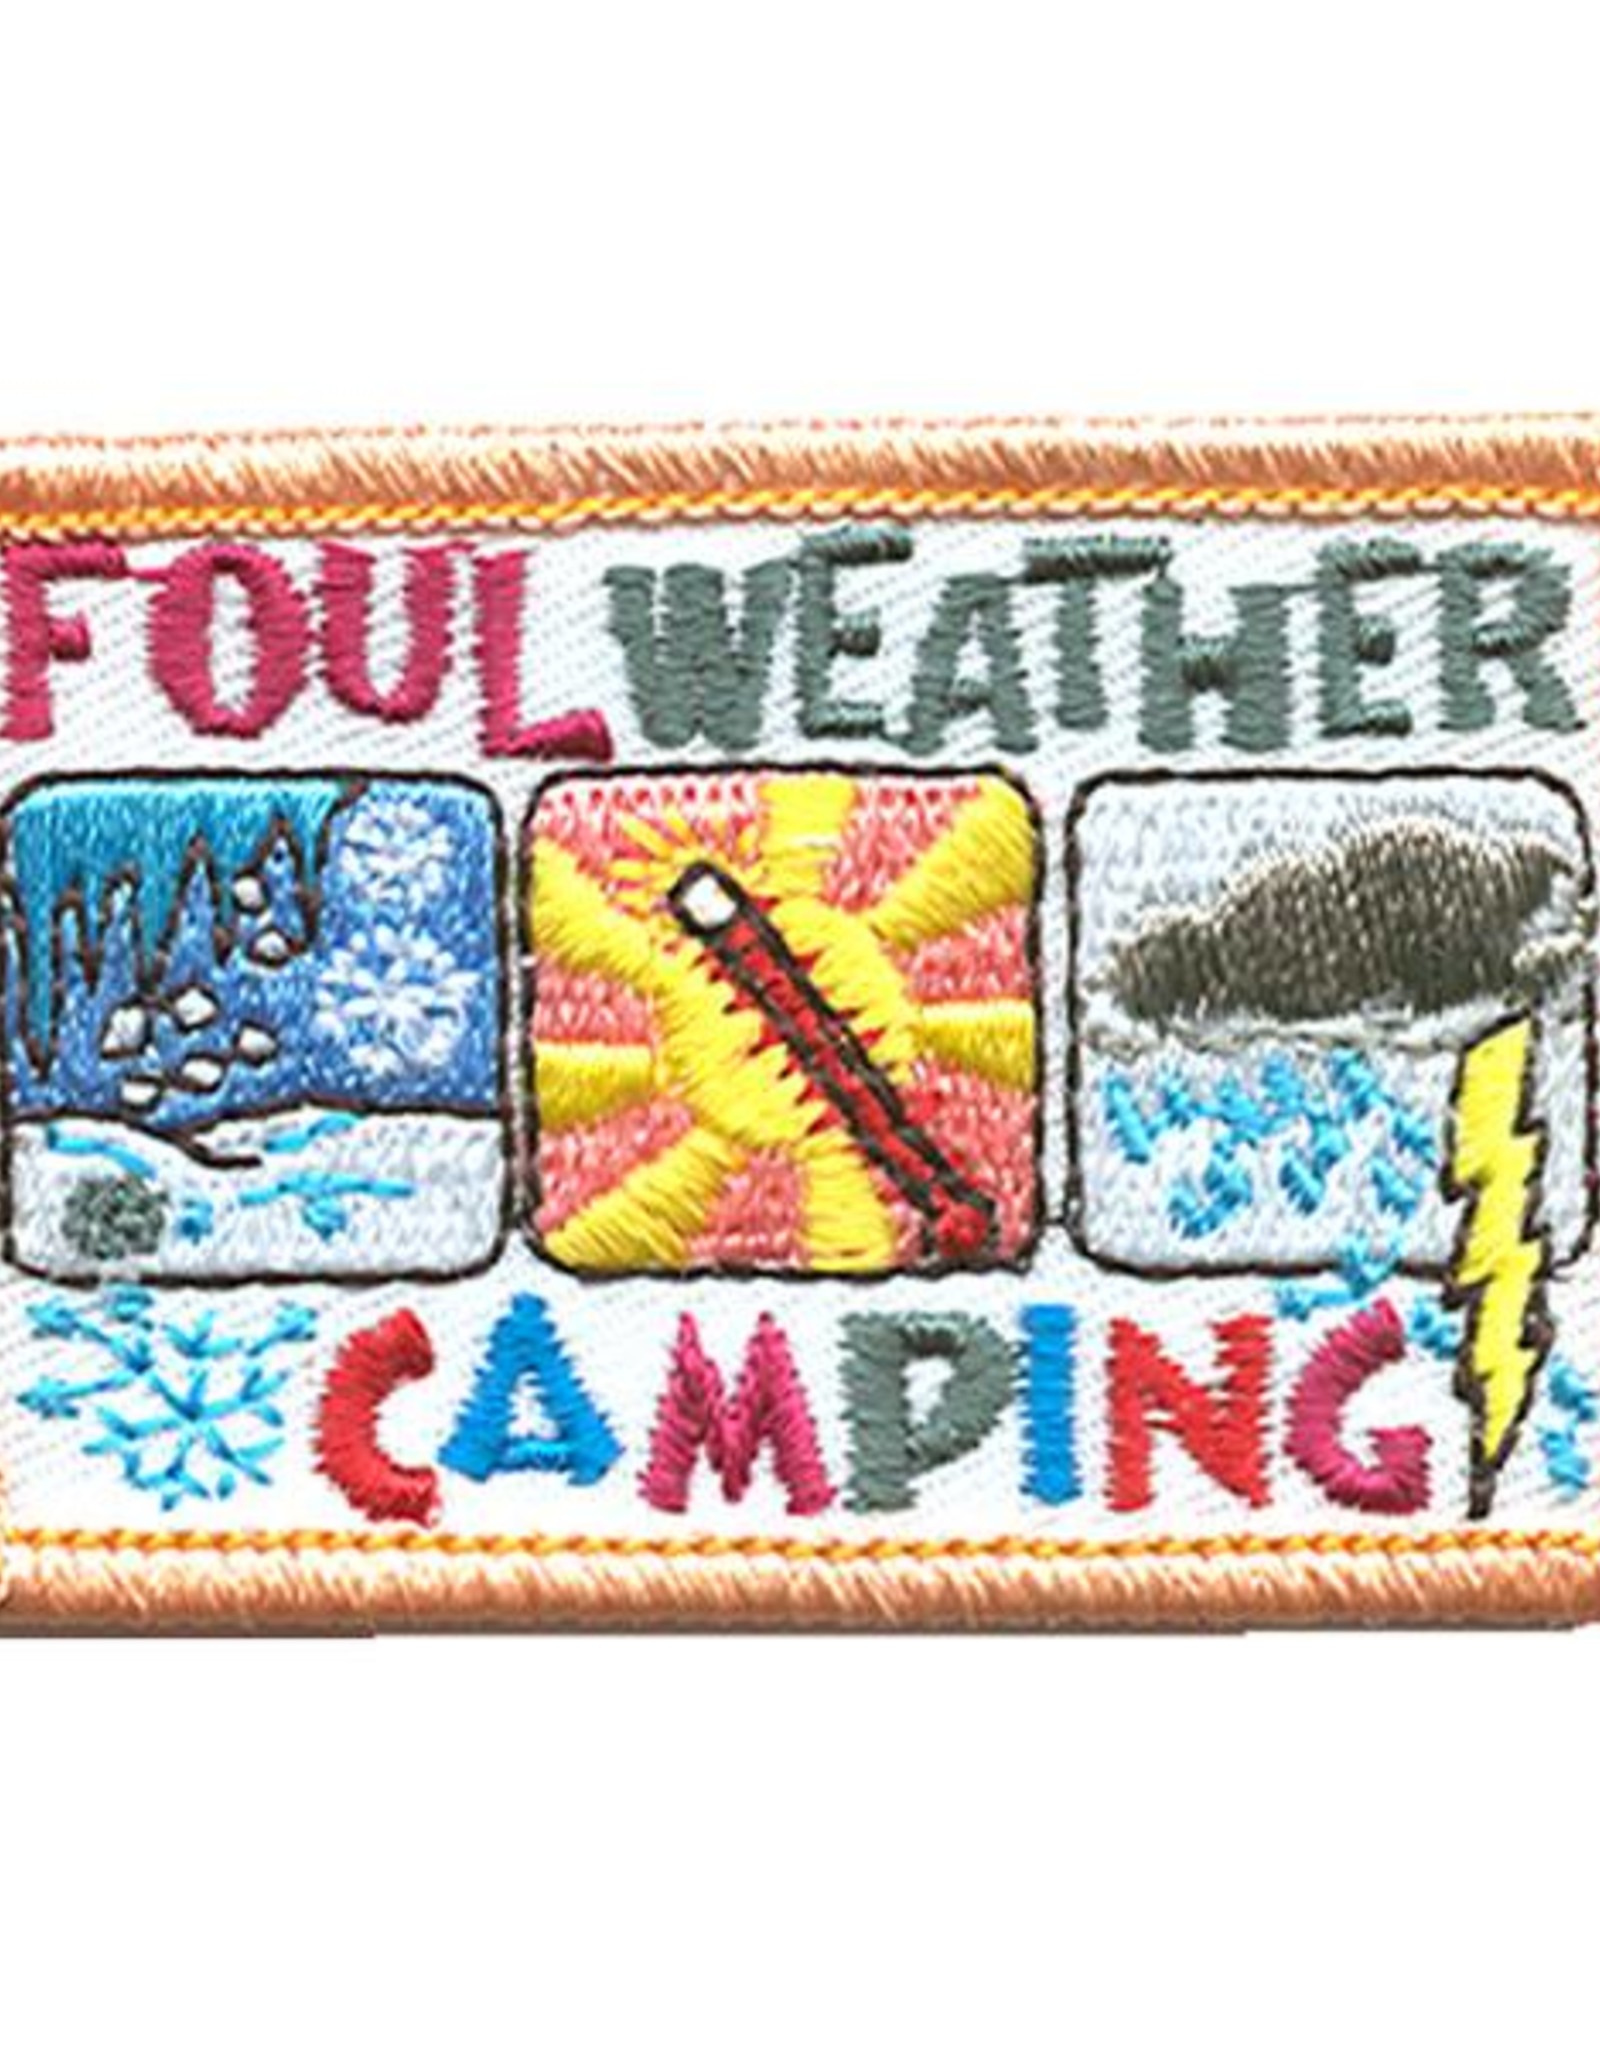 Advantage Emblem & Screen Prnt *Foul Weather Camping Fun Patch